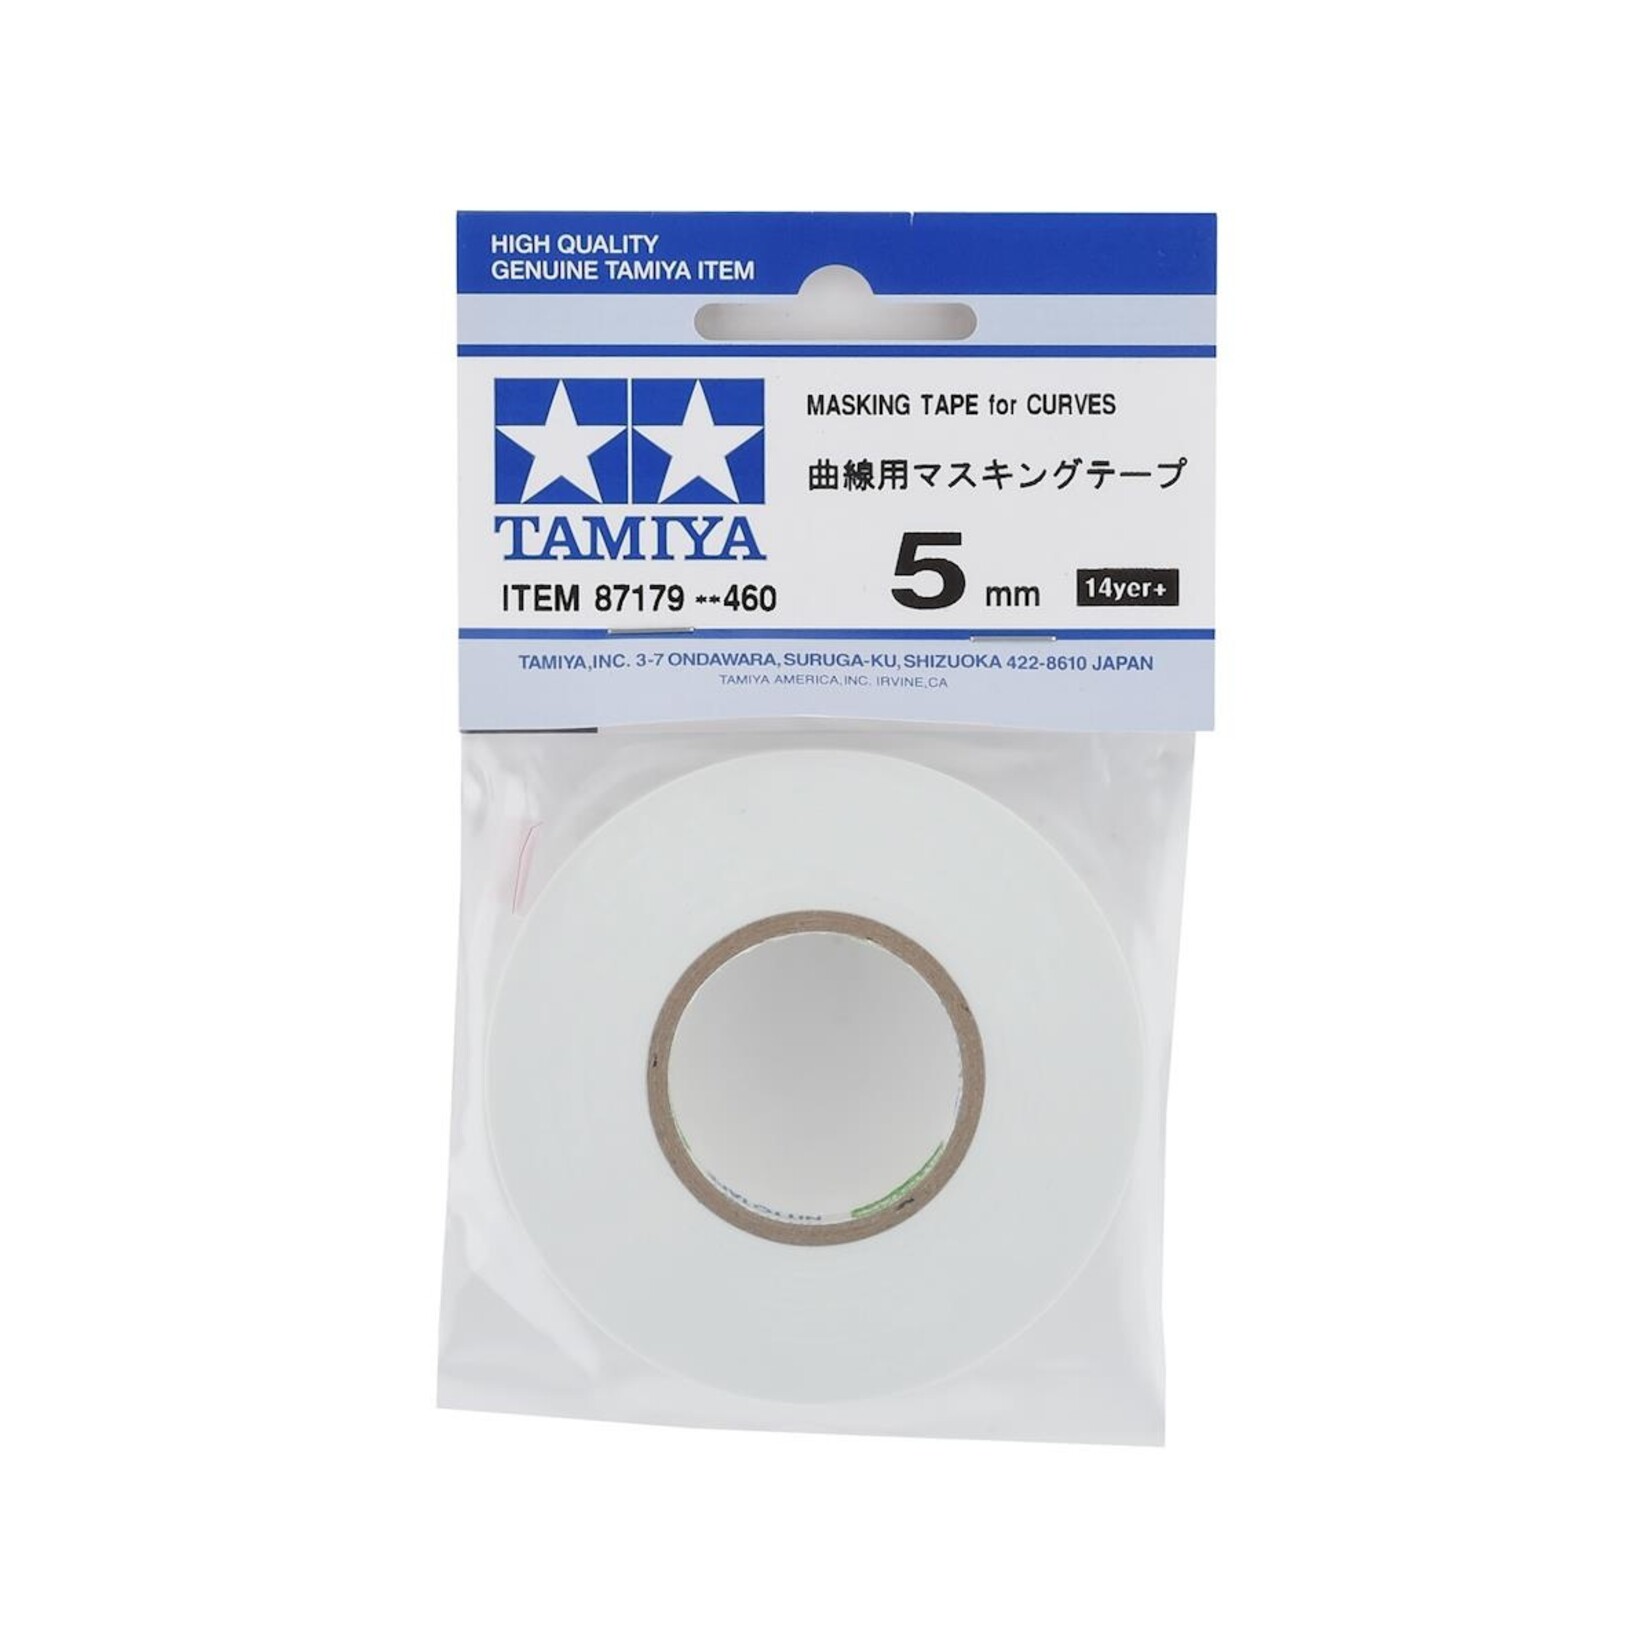 Tamiya Tamiya 5mm Masking Tape (For Curves) #87179